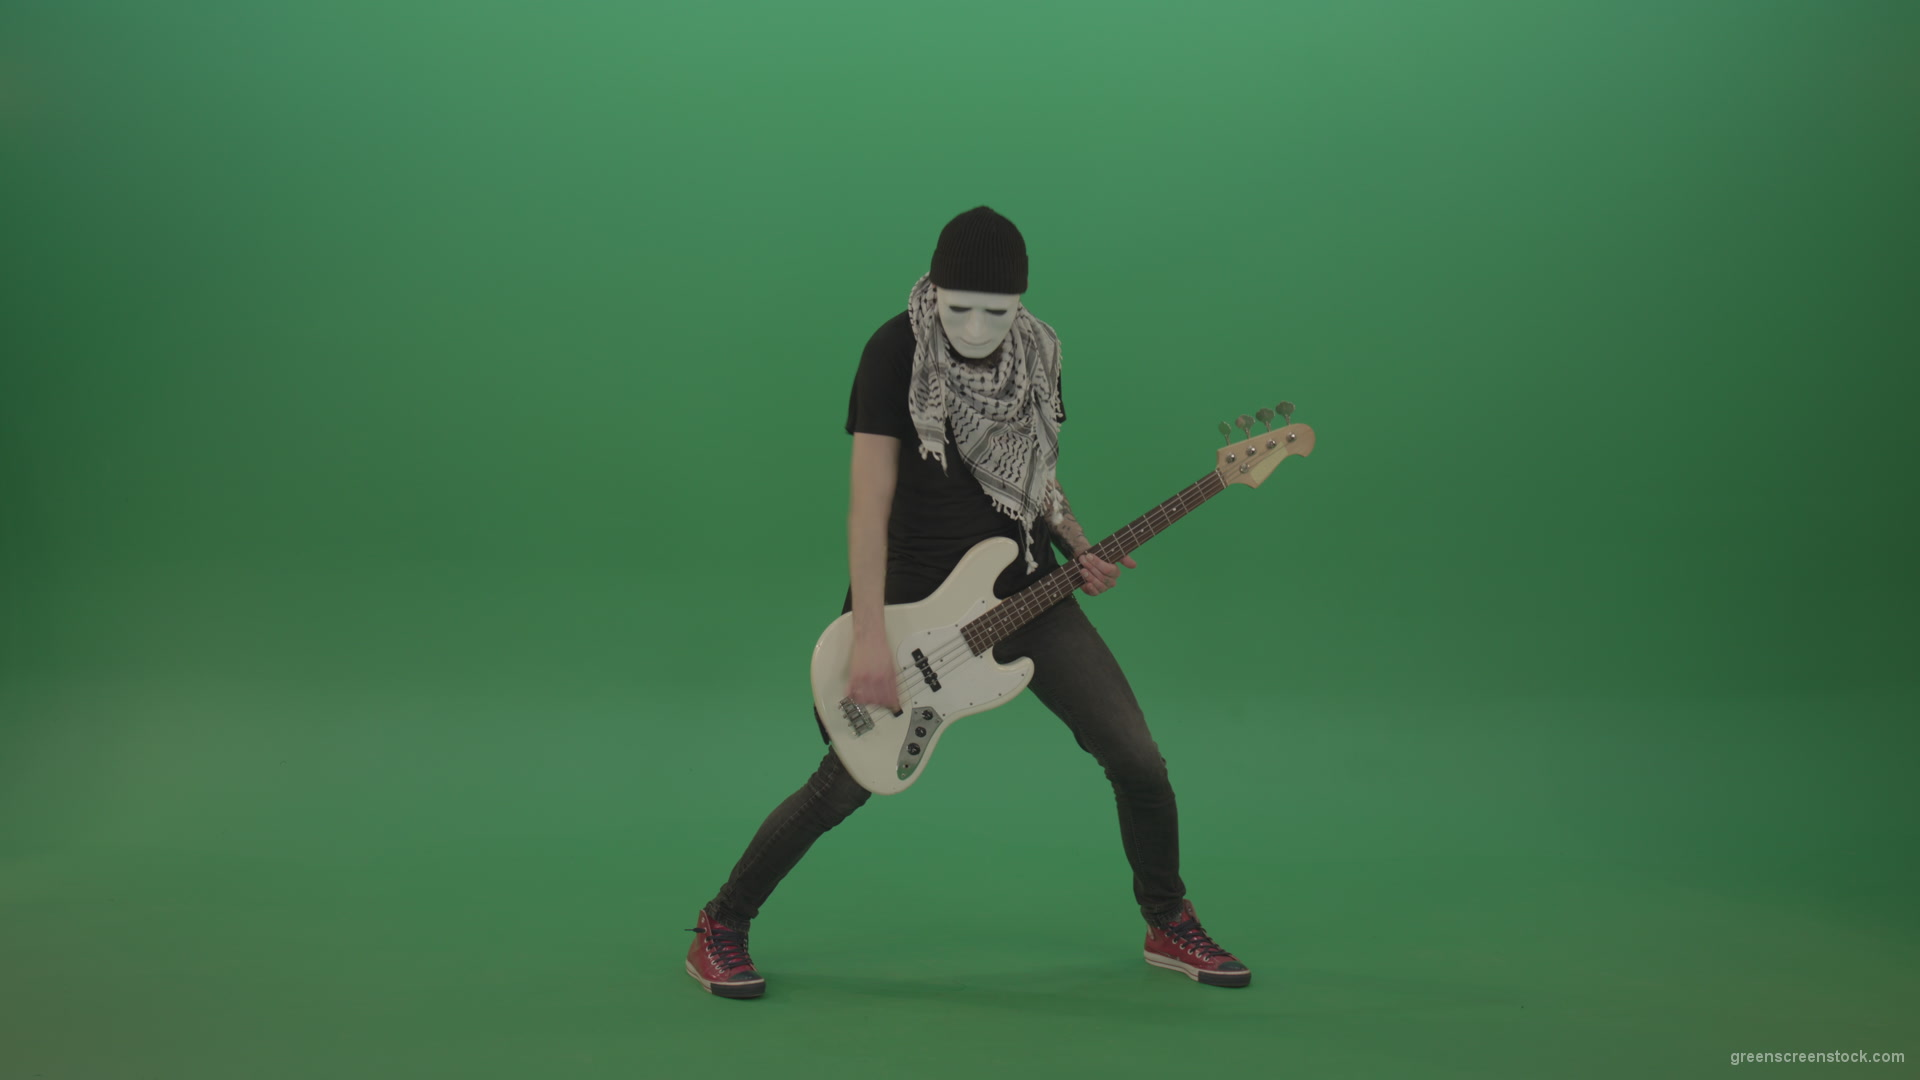 Bass-man-in-white-mask-play-guitar-on-green-screen_007 Green Screen Stock